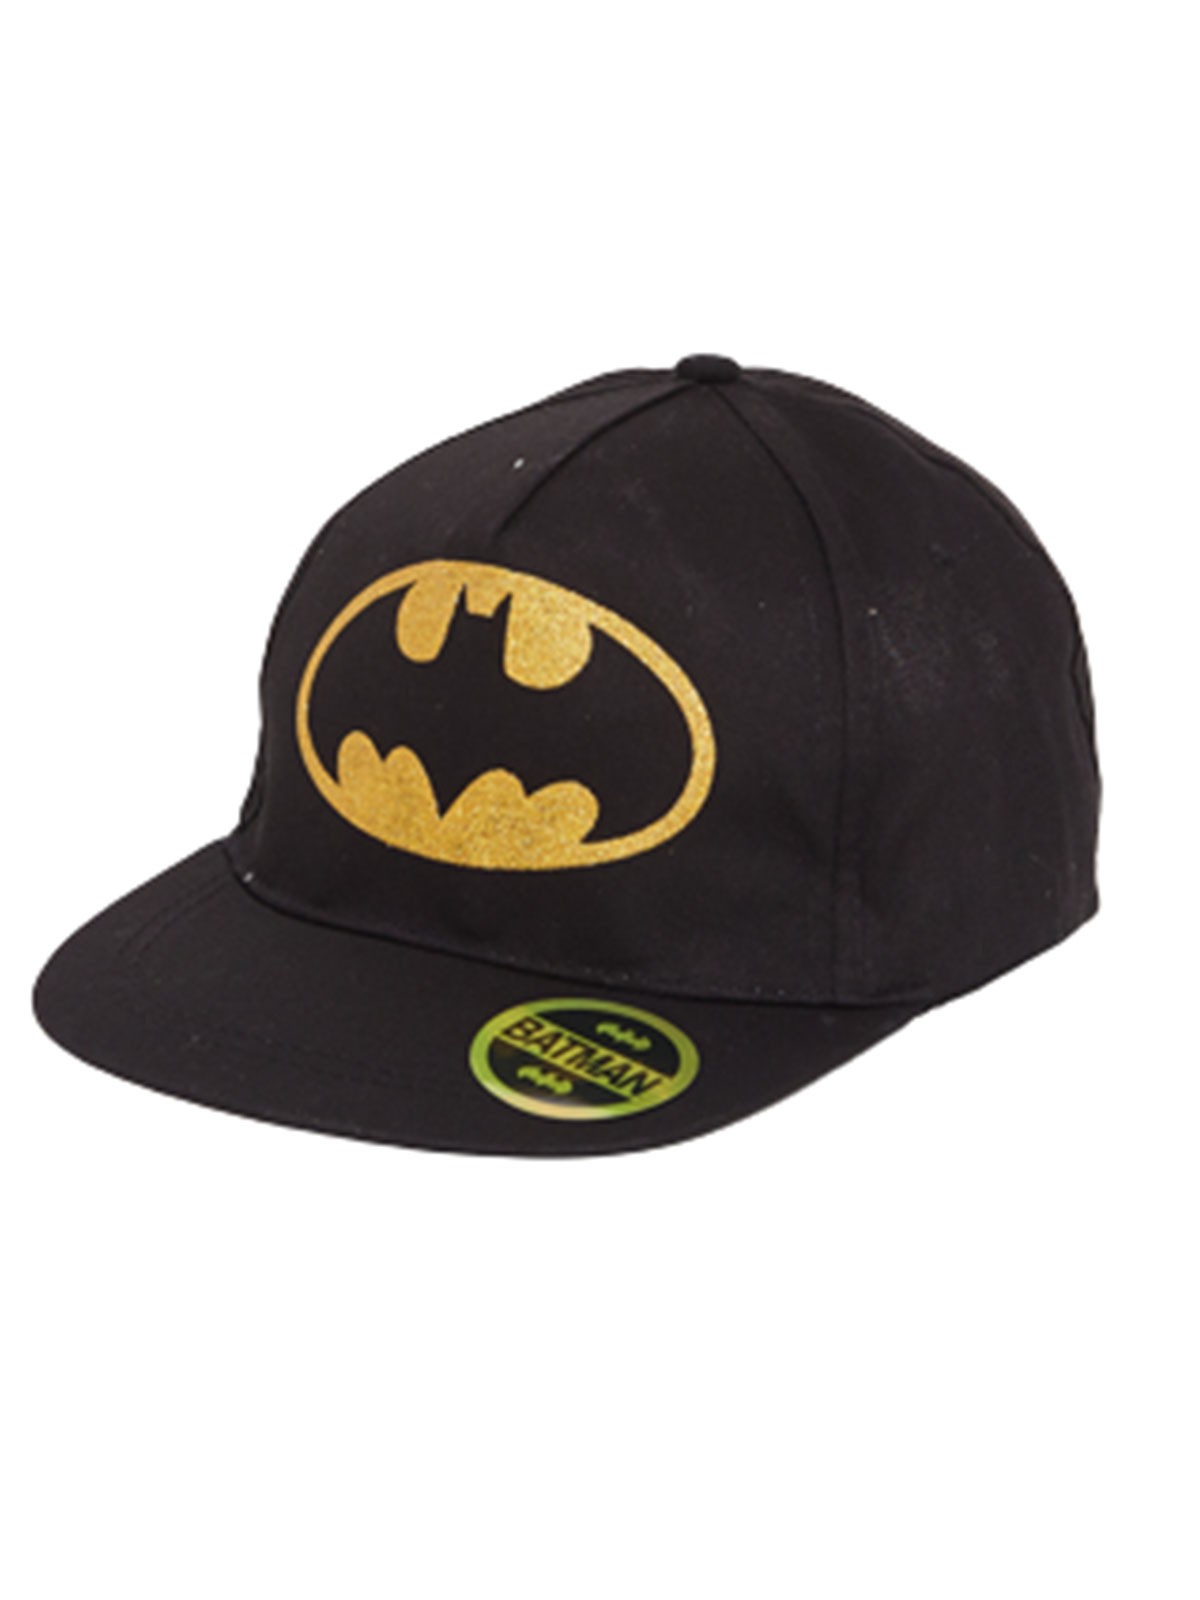 Batman Cap with visor